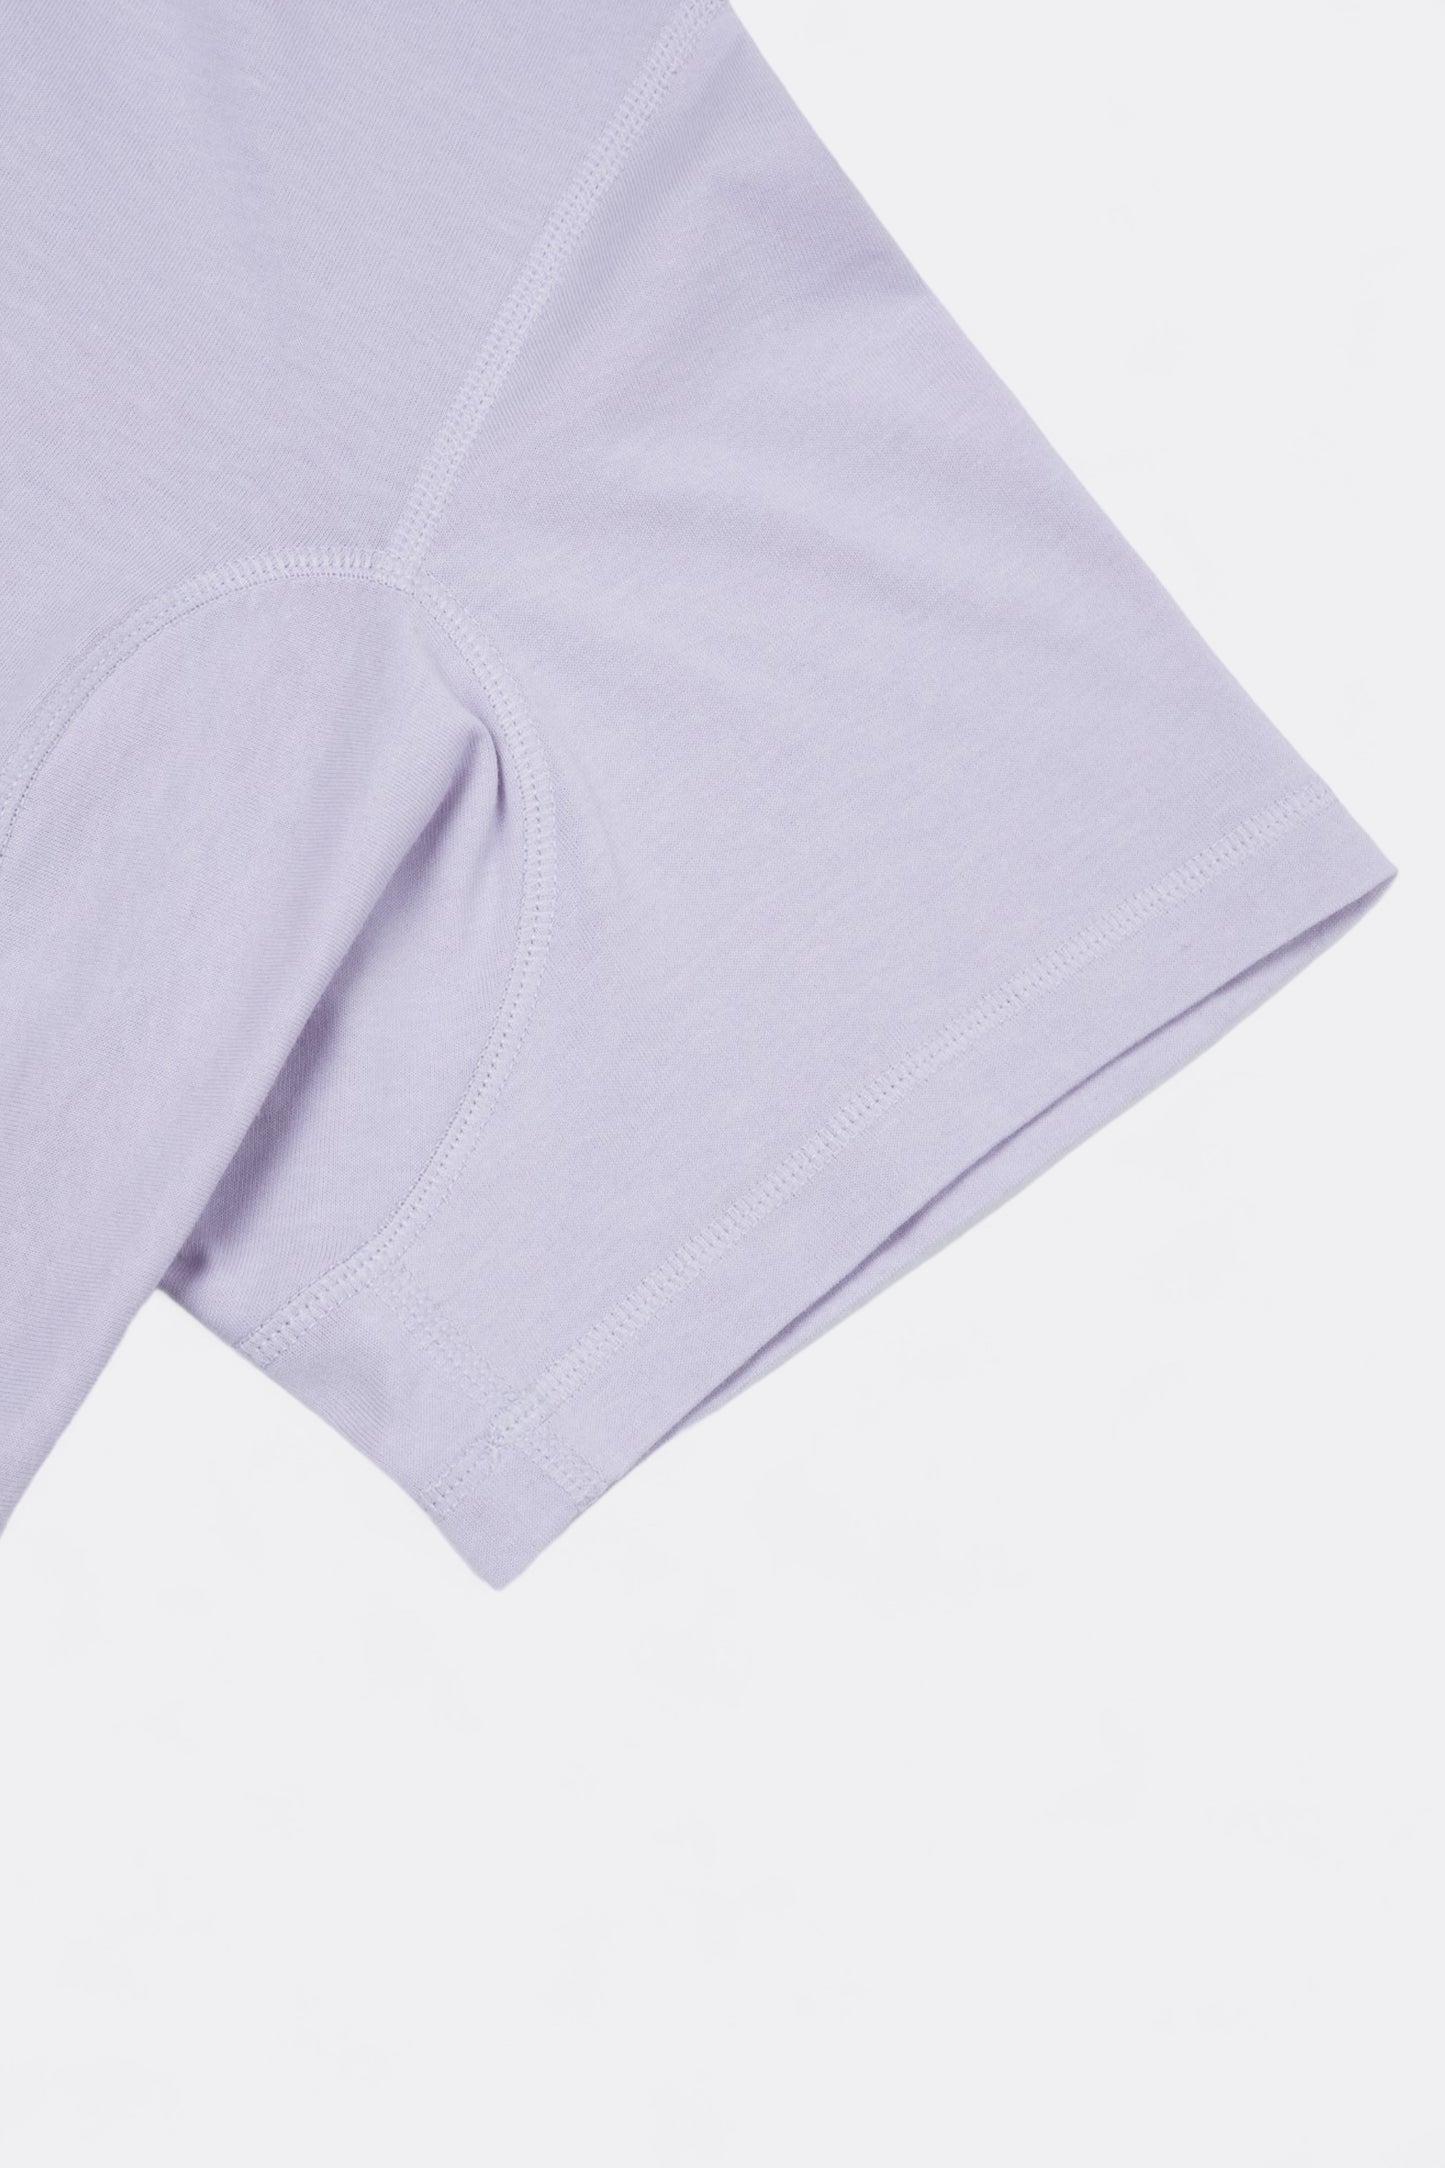 Satisfy - Softcell™ Cordura® Climb T-Shirt (Lilac)